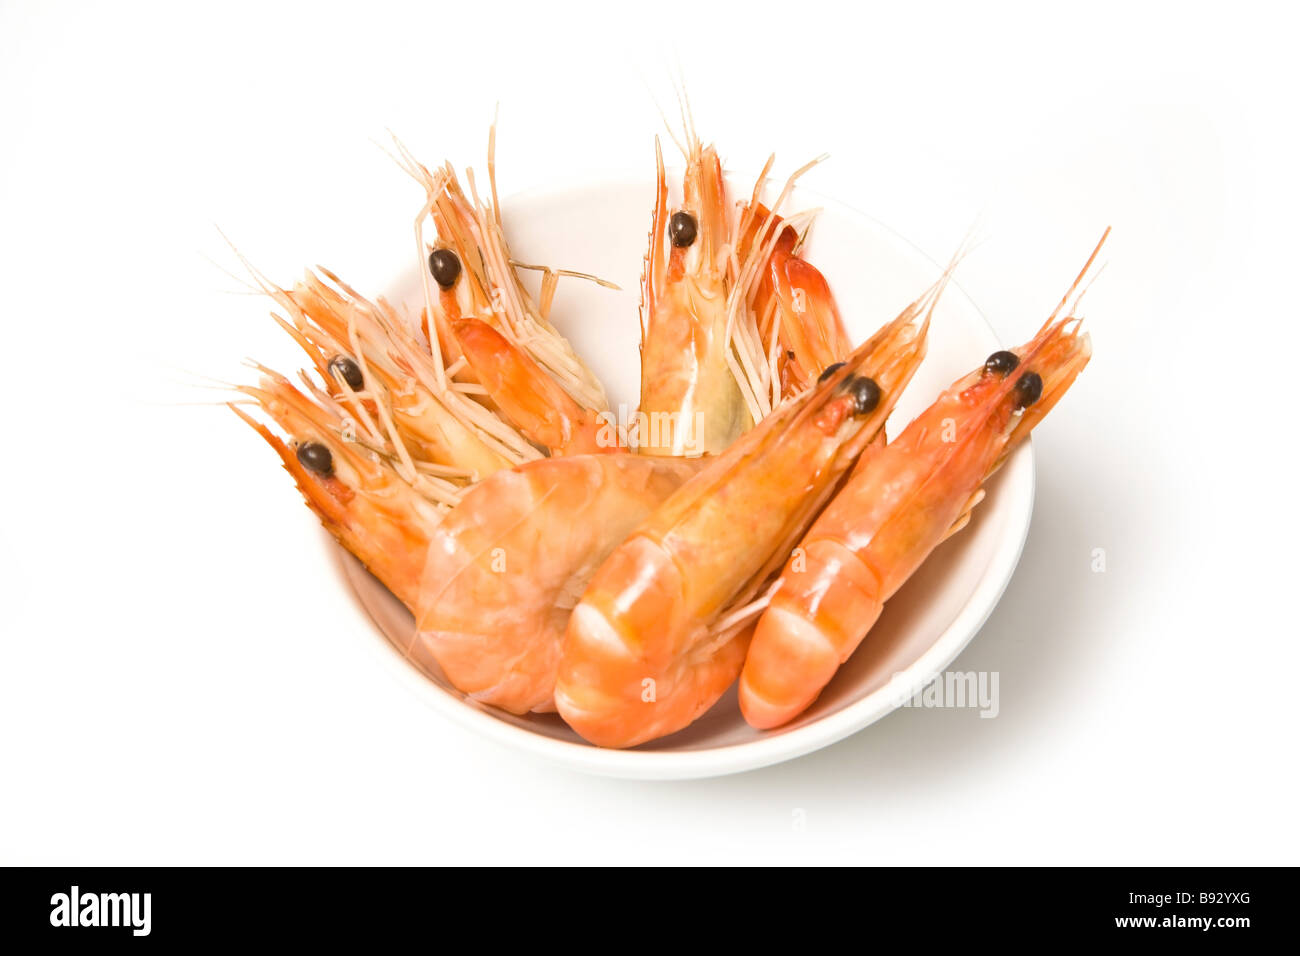 Bowl of Crevettes cooked prawns shrimp isolated on a white studio background Stock Photo